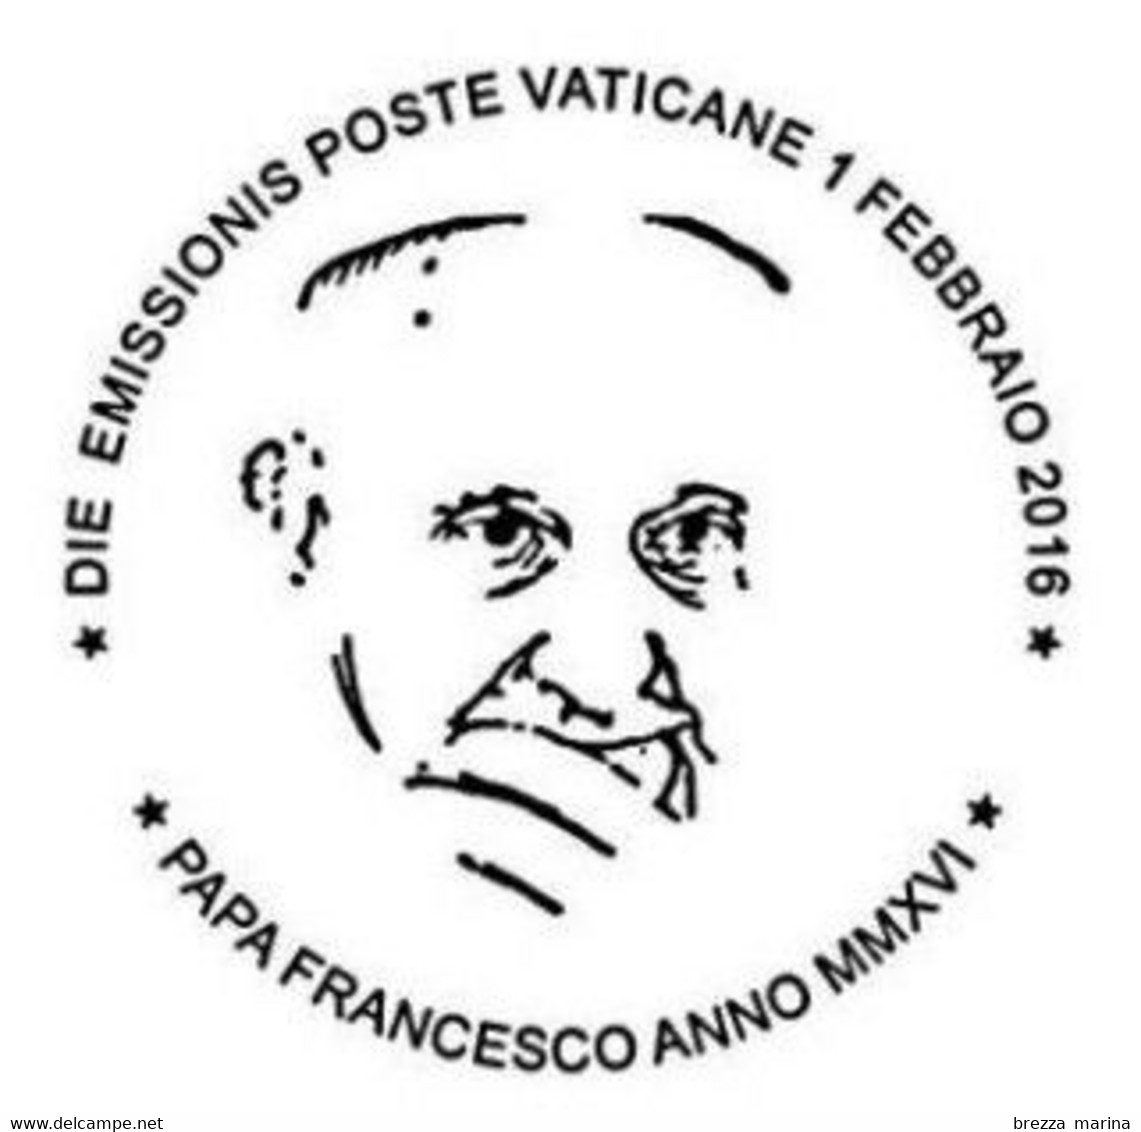 VATICANO - Usato - 2016 - Pontificato Di Papa Francesco - MMXVI - IVBILAEVM MISERICORDIAE - 0,95 - Gebraucht